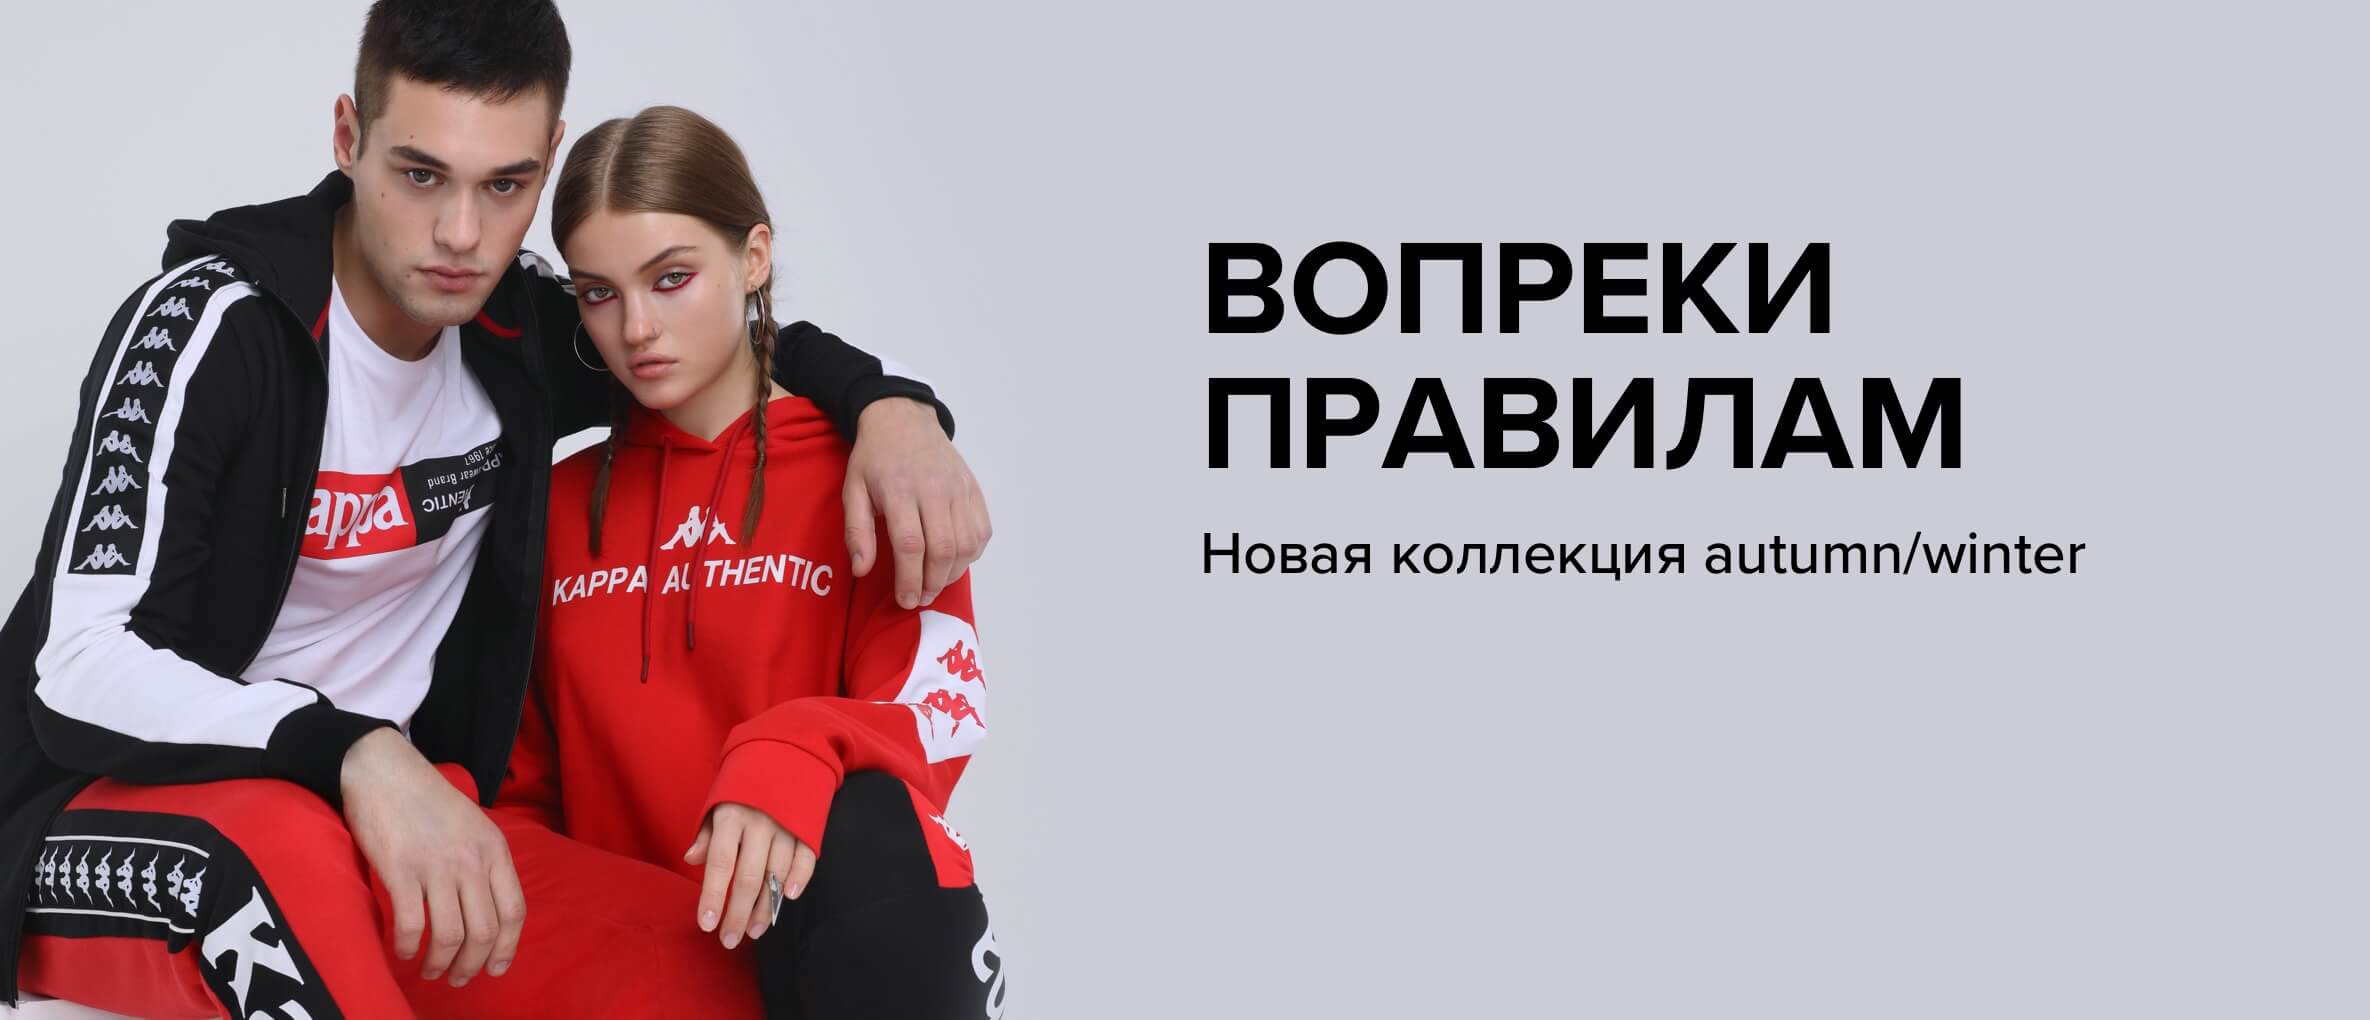 Спортмастер Интернет Магазин Каталог Одежды Москва